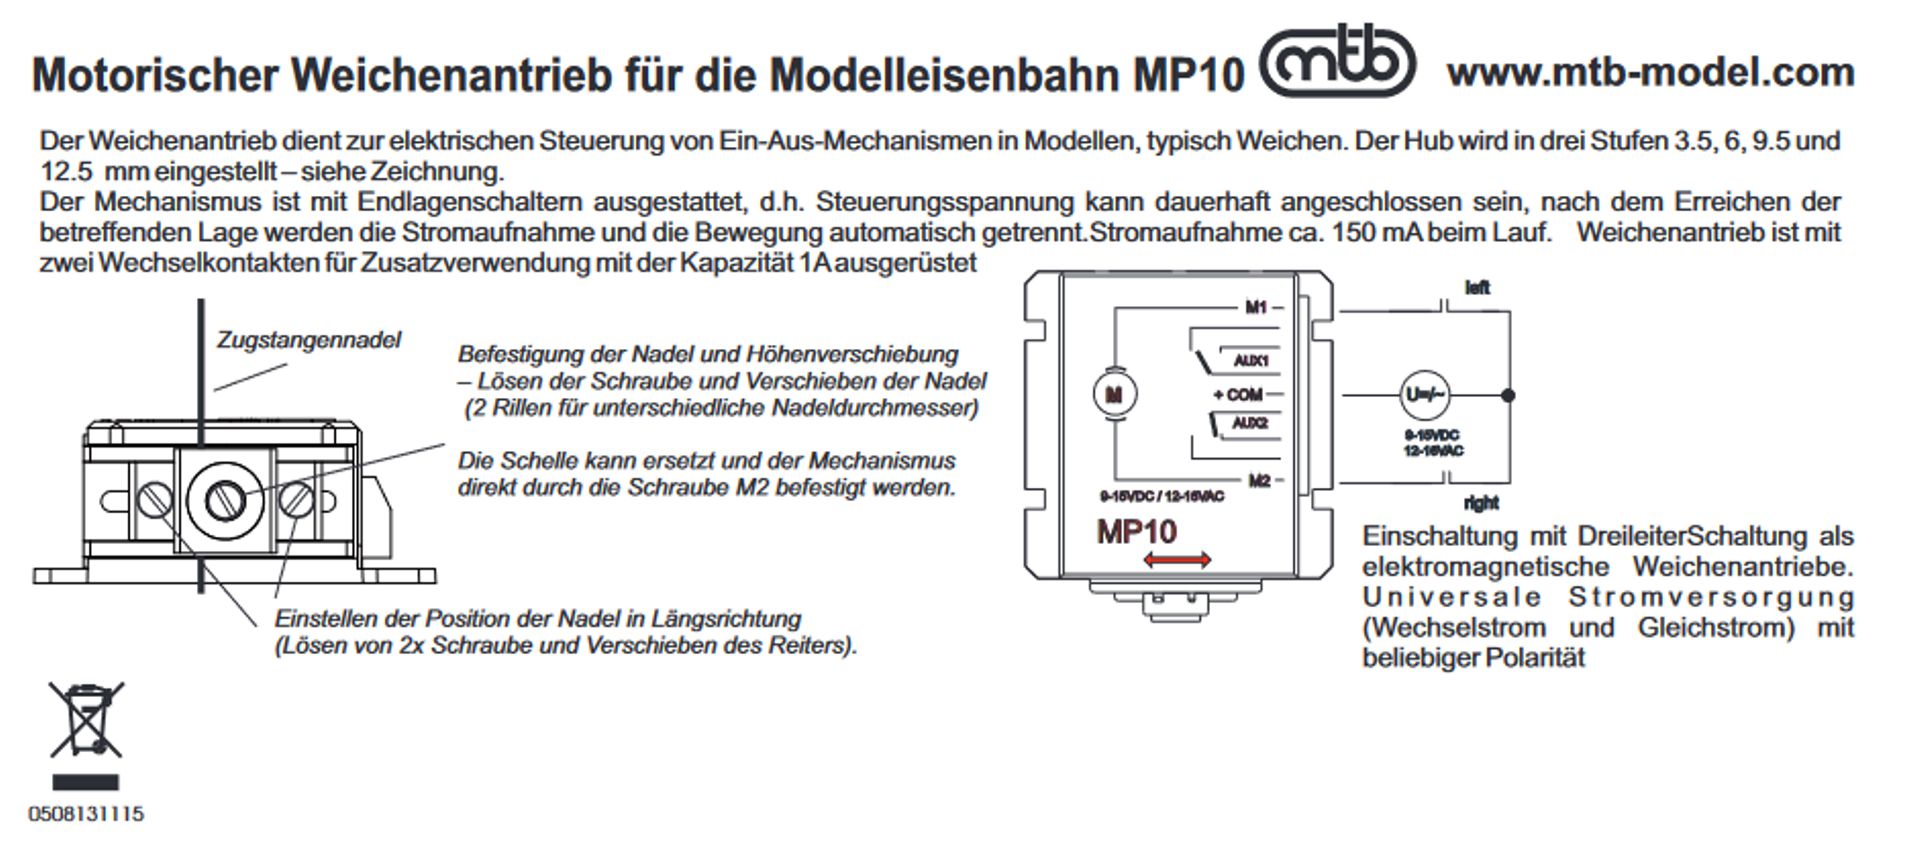 mtb MP10 - Unterflurantrieb